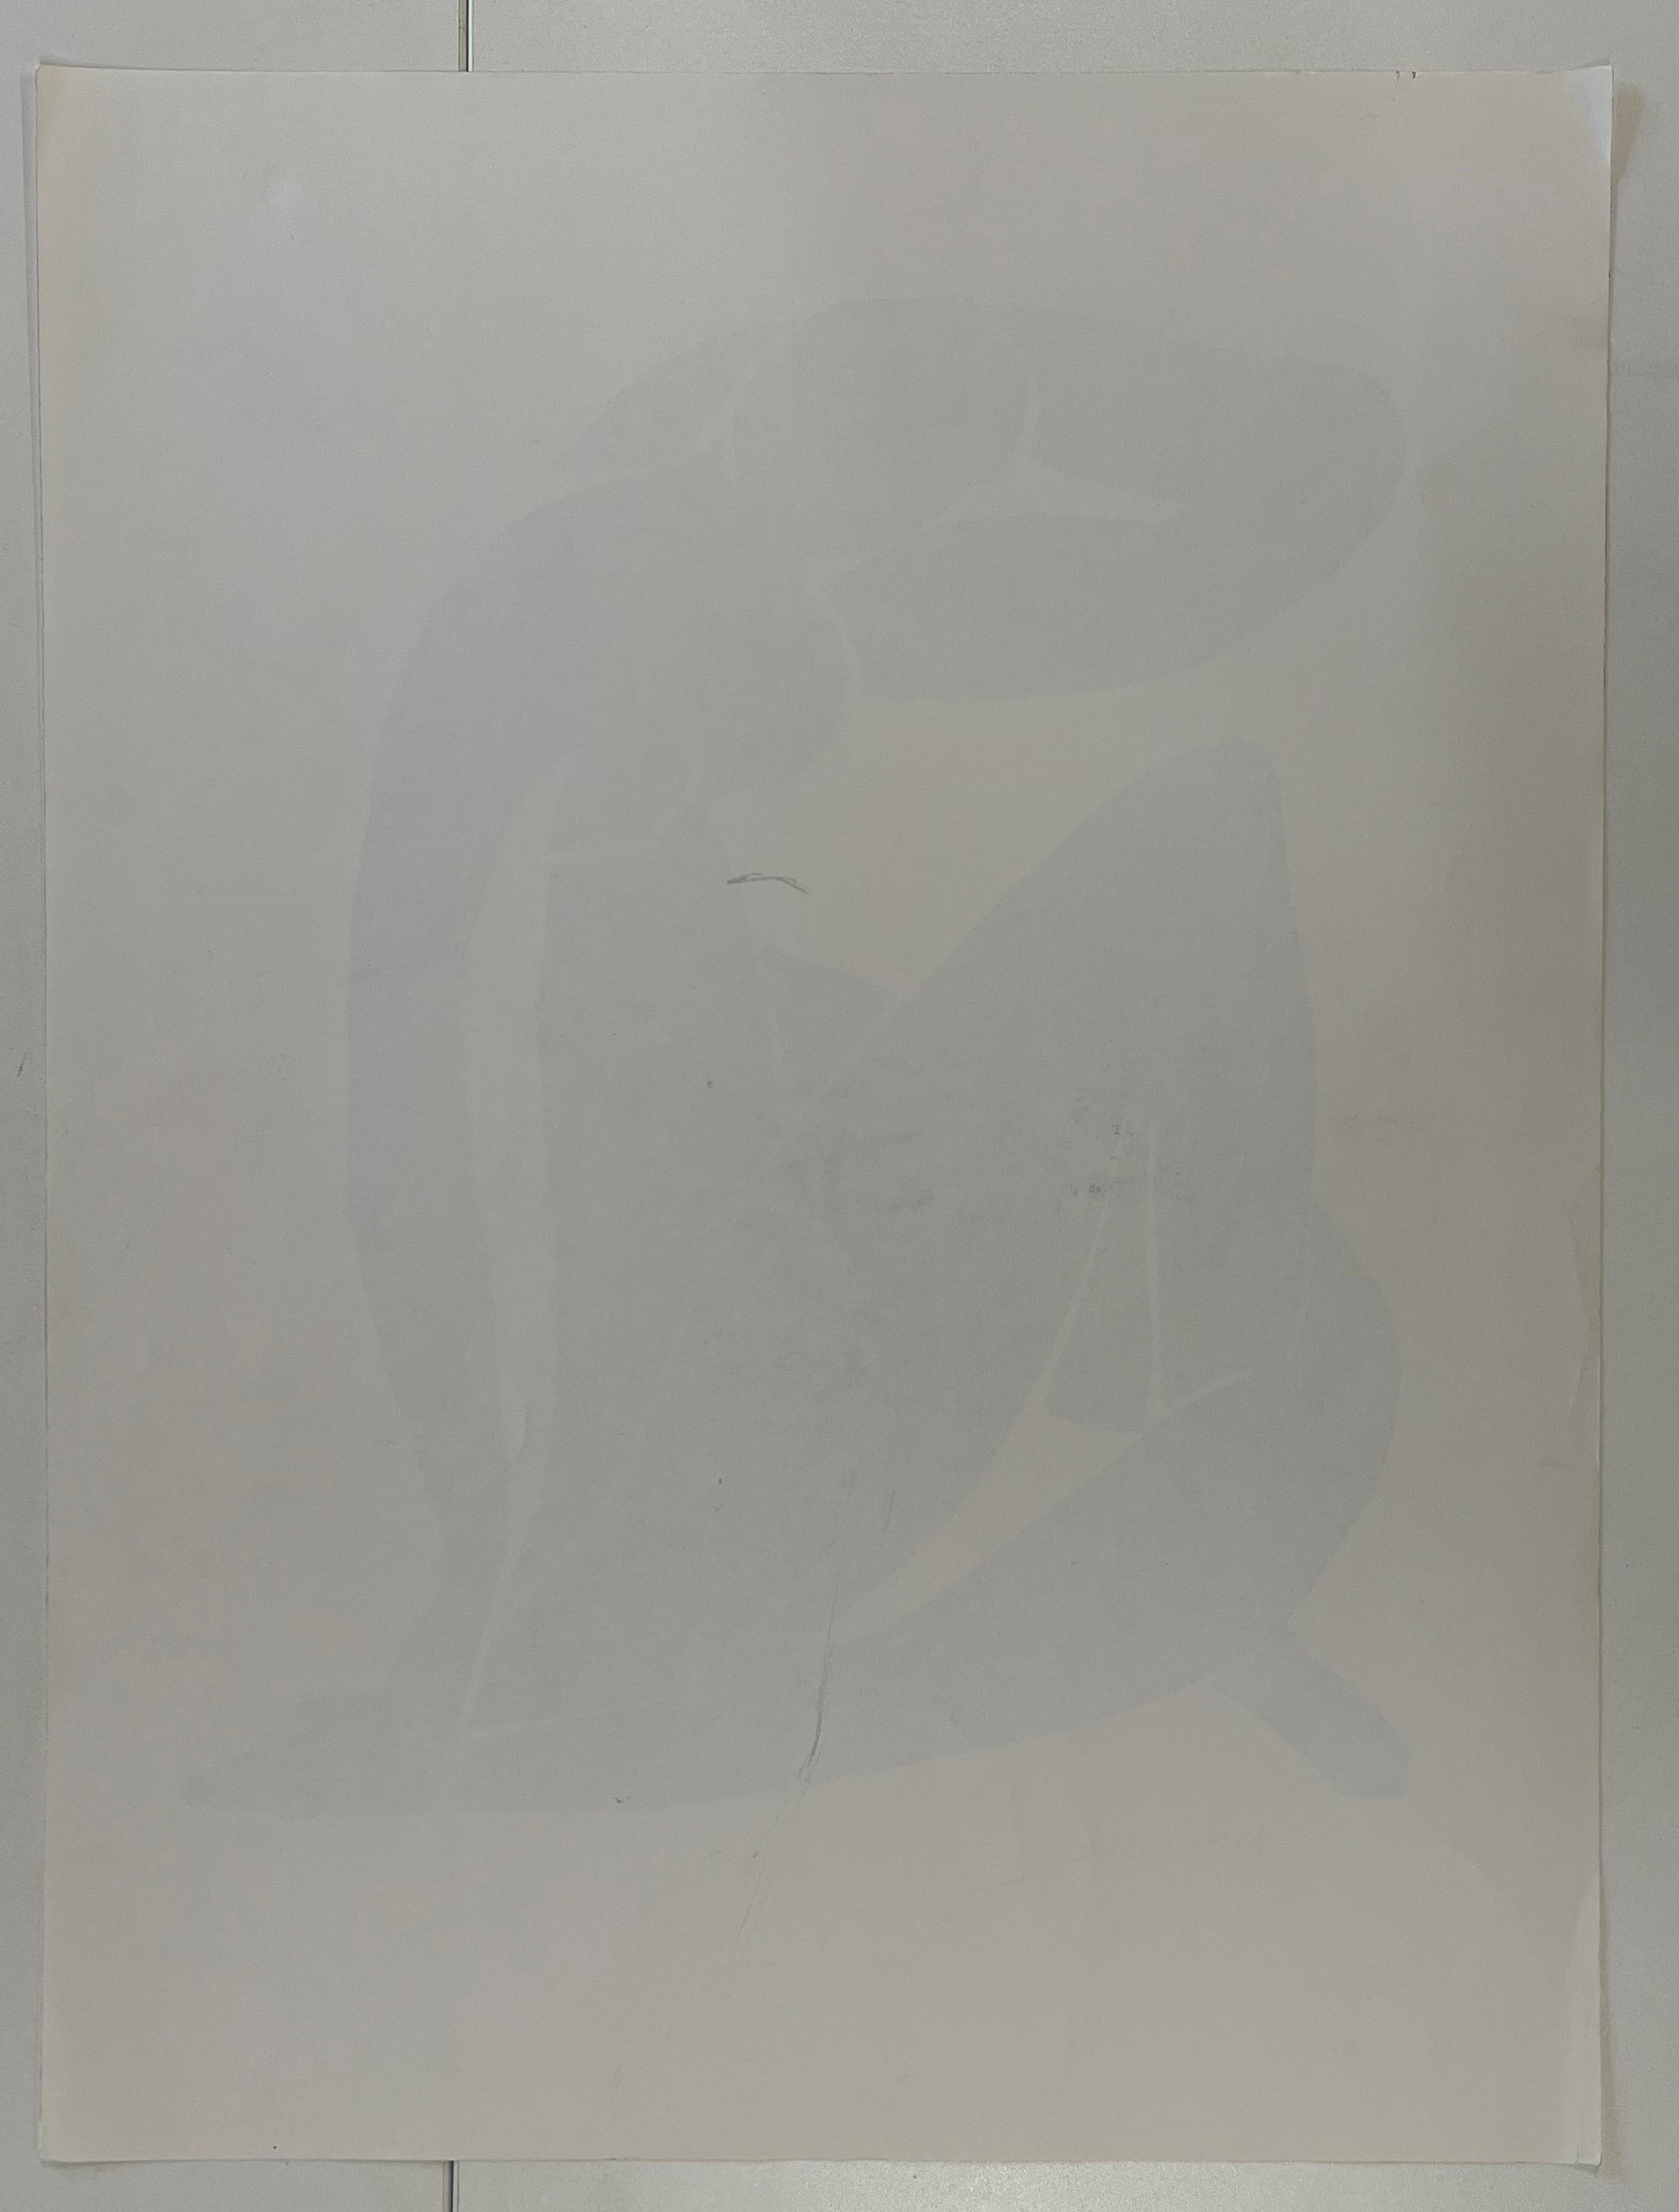 SIX VINTAGE LITHOGRAPHS ON PAPER AFTER HENRI MATISSE - Image 12 of 19